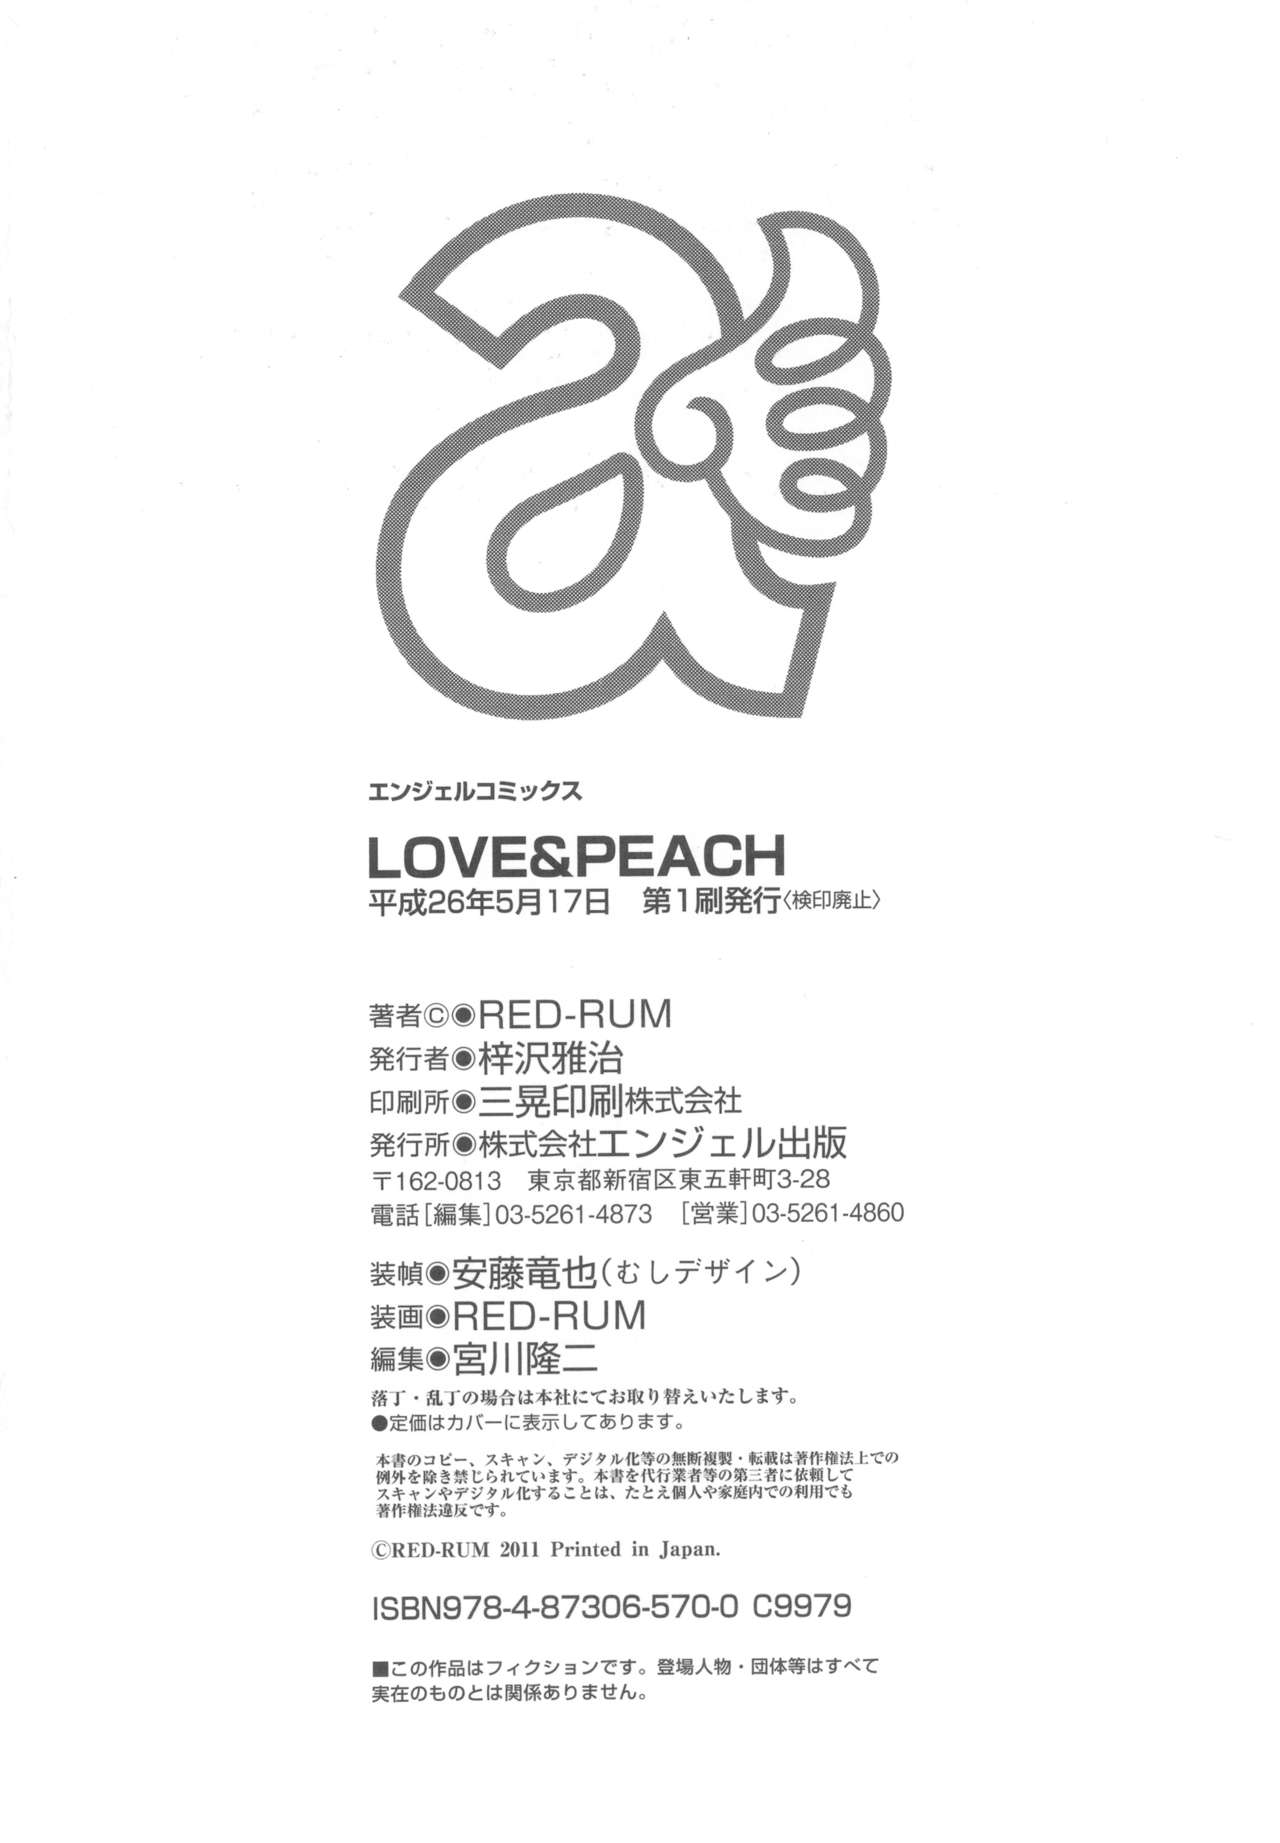 [RED-RUM] LOVE&PEACH [RED-RUM] LOVE&PEACH + 4Pリーフレット, 複製原画, メッセージペーパー